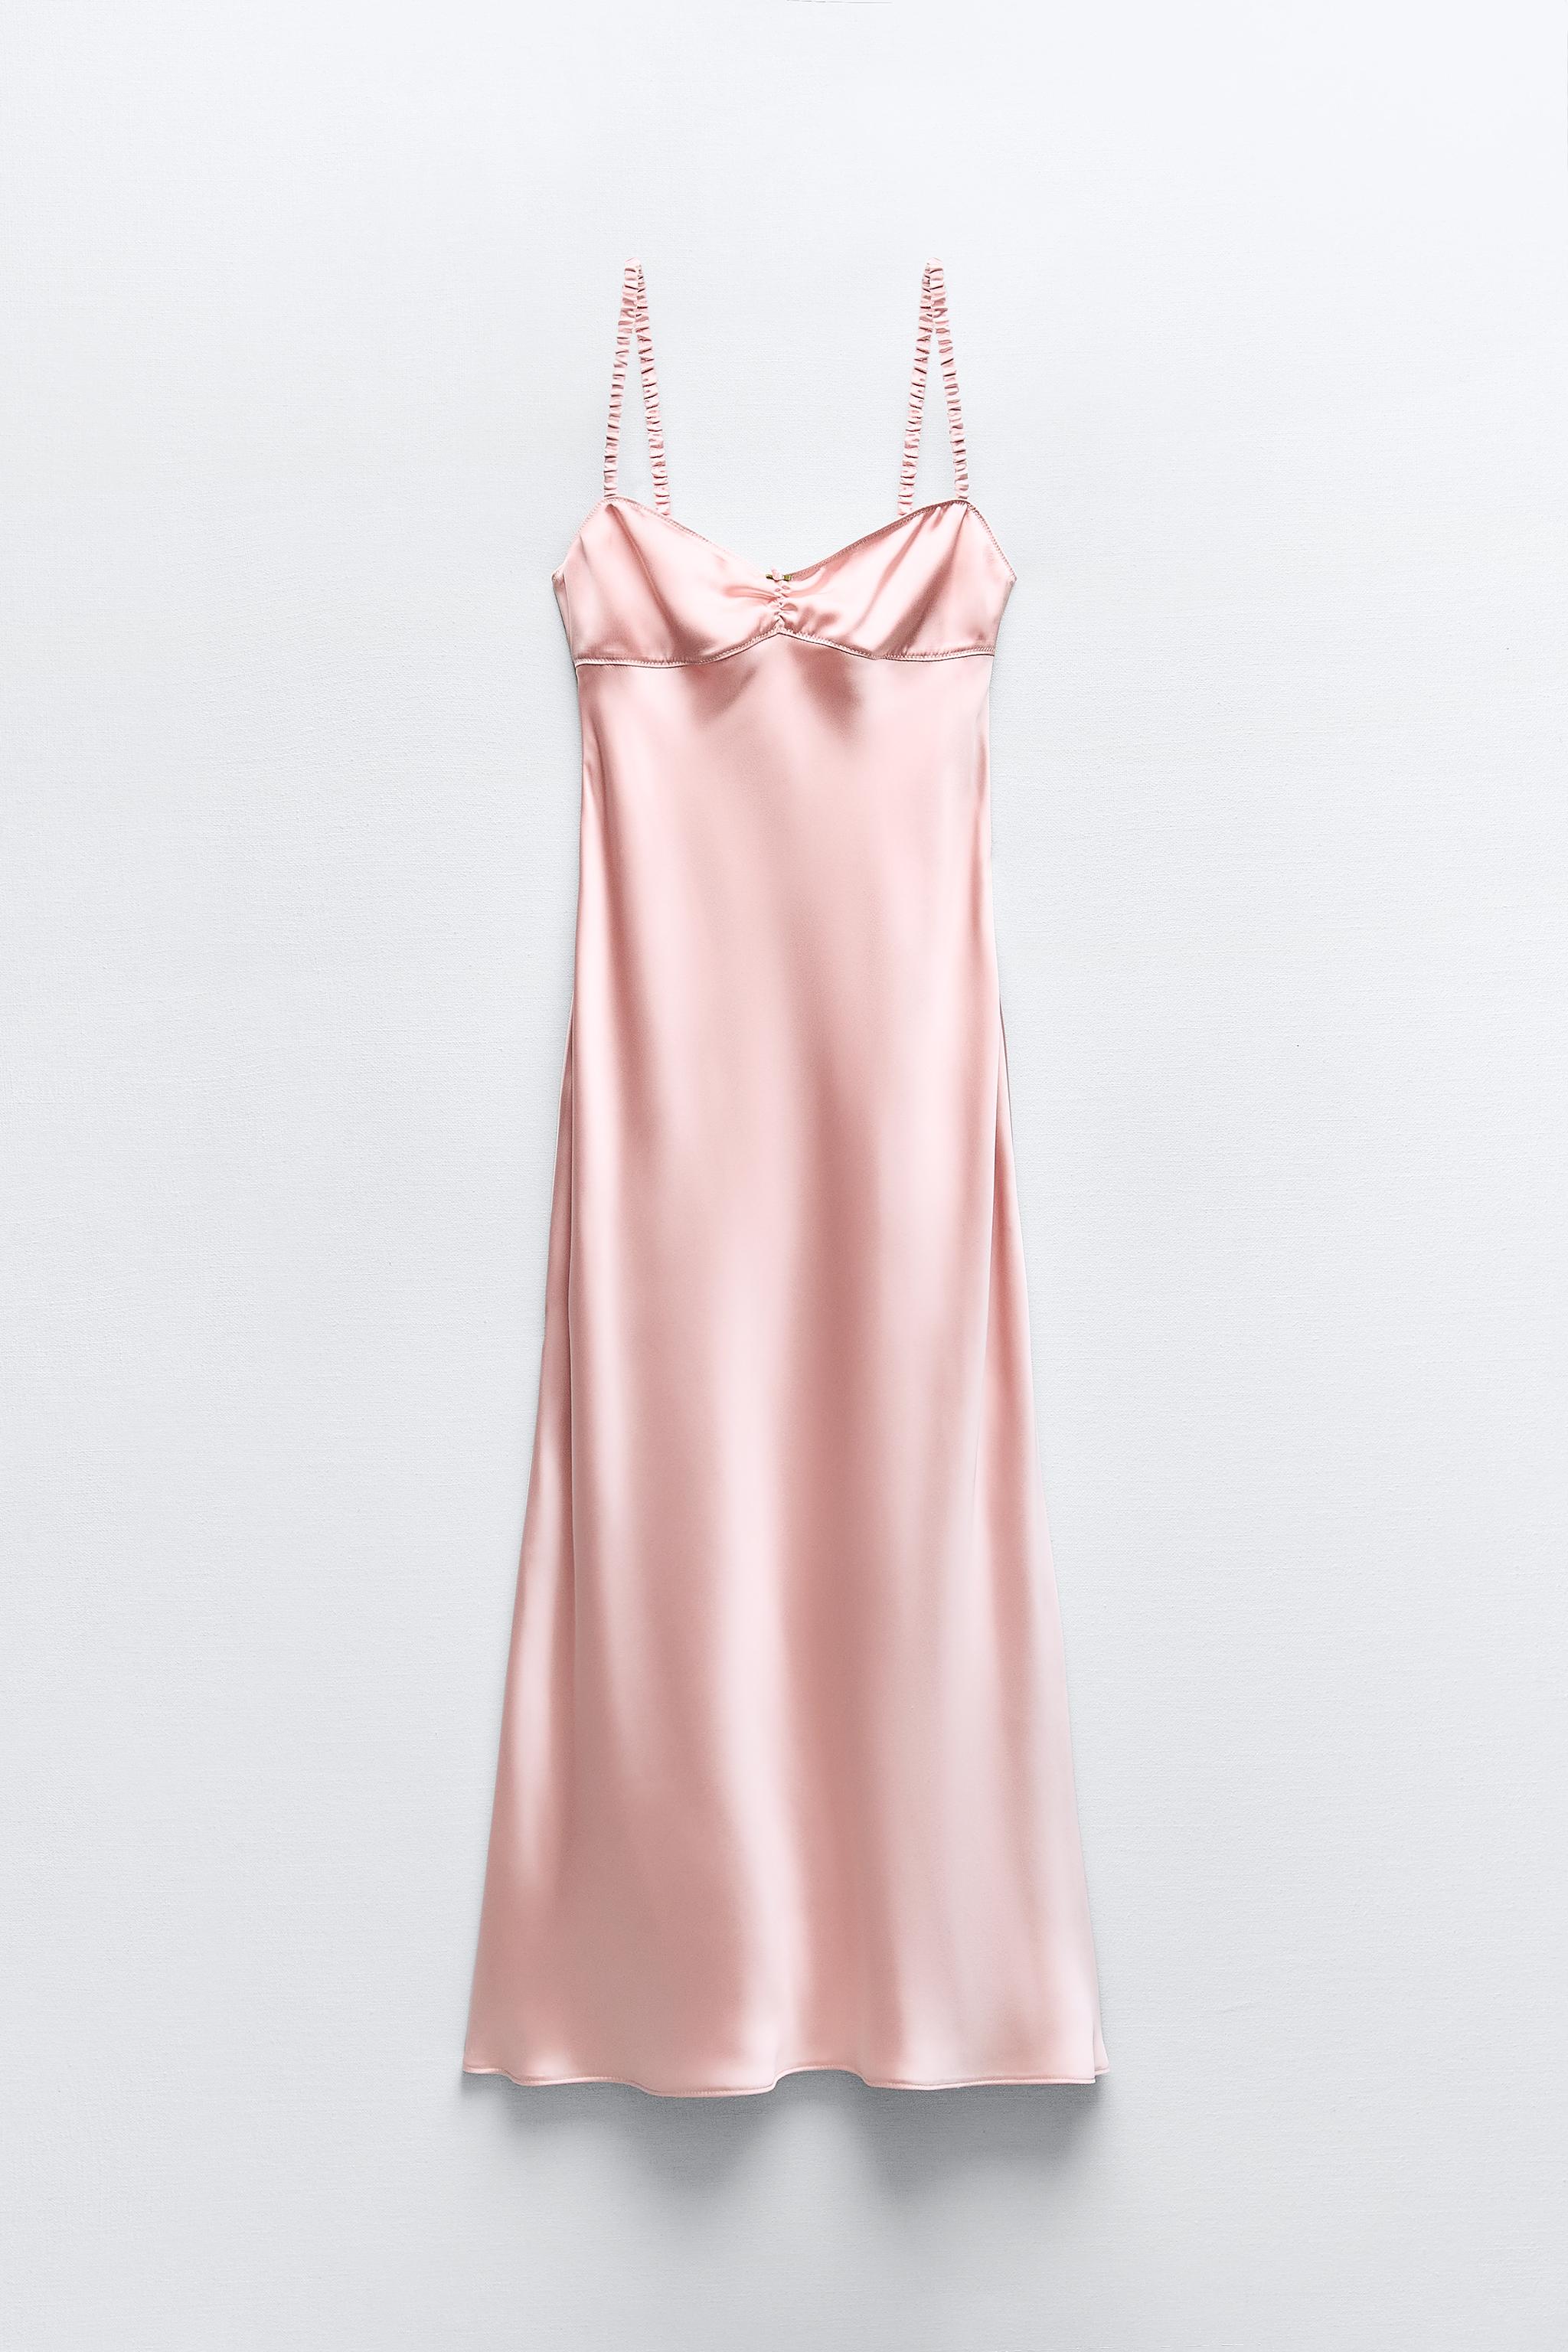 Zara Pink Floral Draped Corset Satin Effect Bodysuit worn by